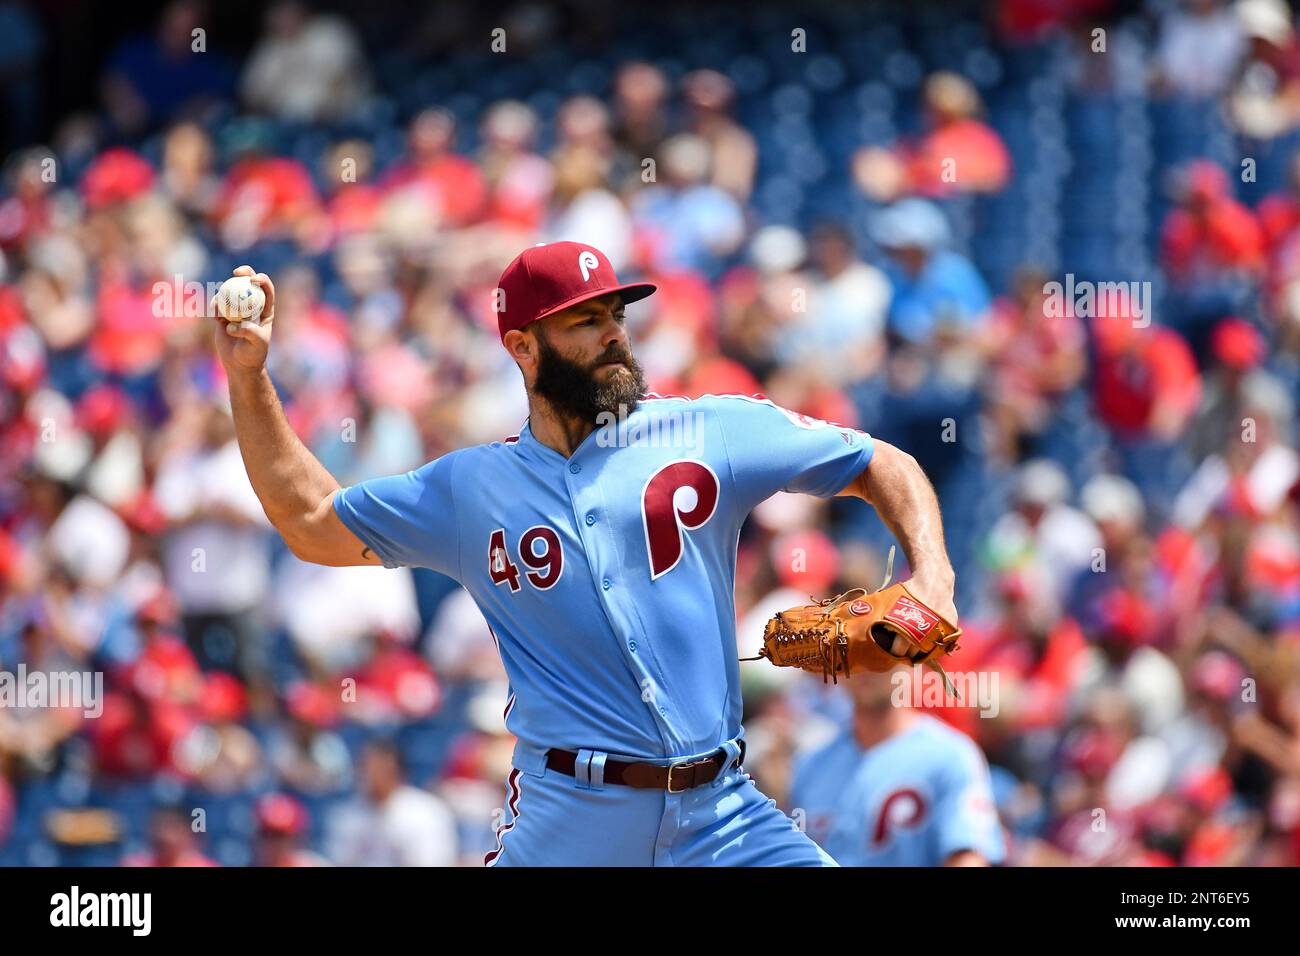 Phillies 2019 season preview: Starting pitcher Jake Arrieta